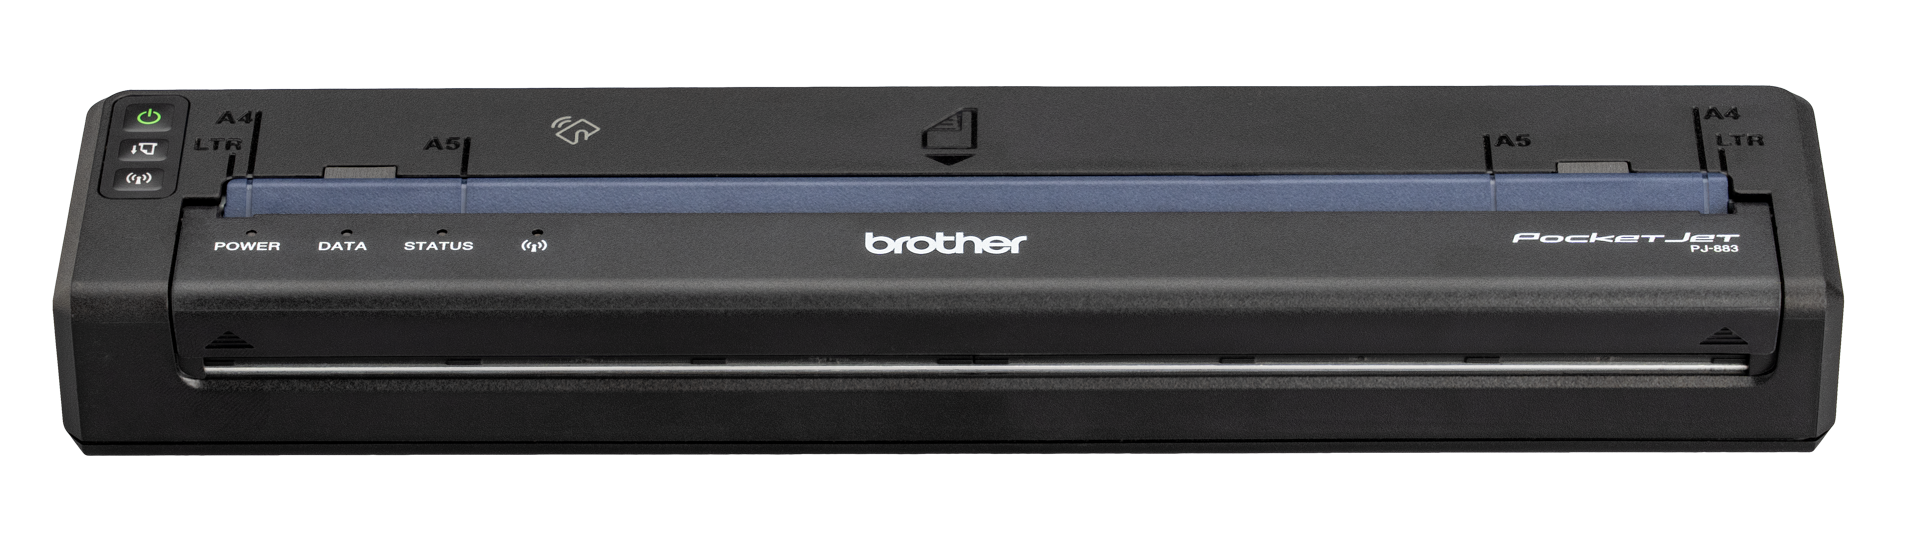 Brother PJ722 A4 Portable Printer